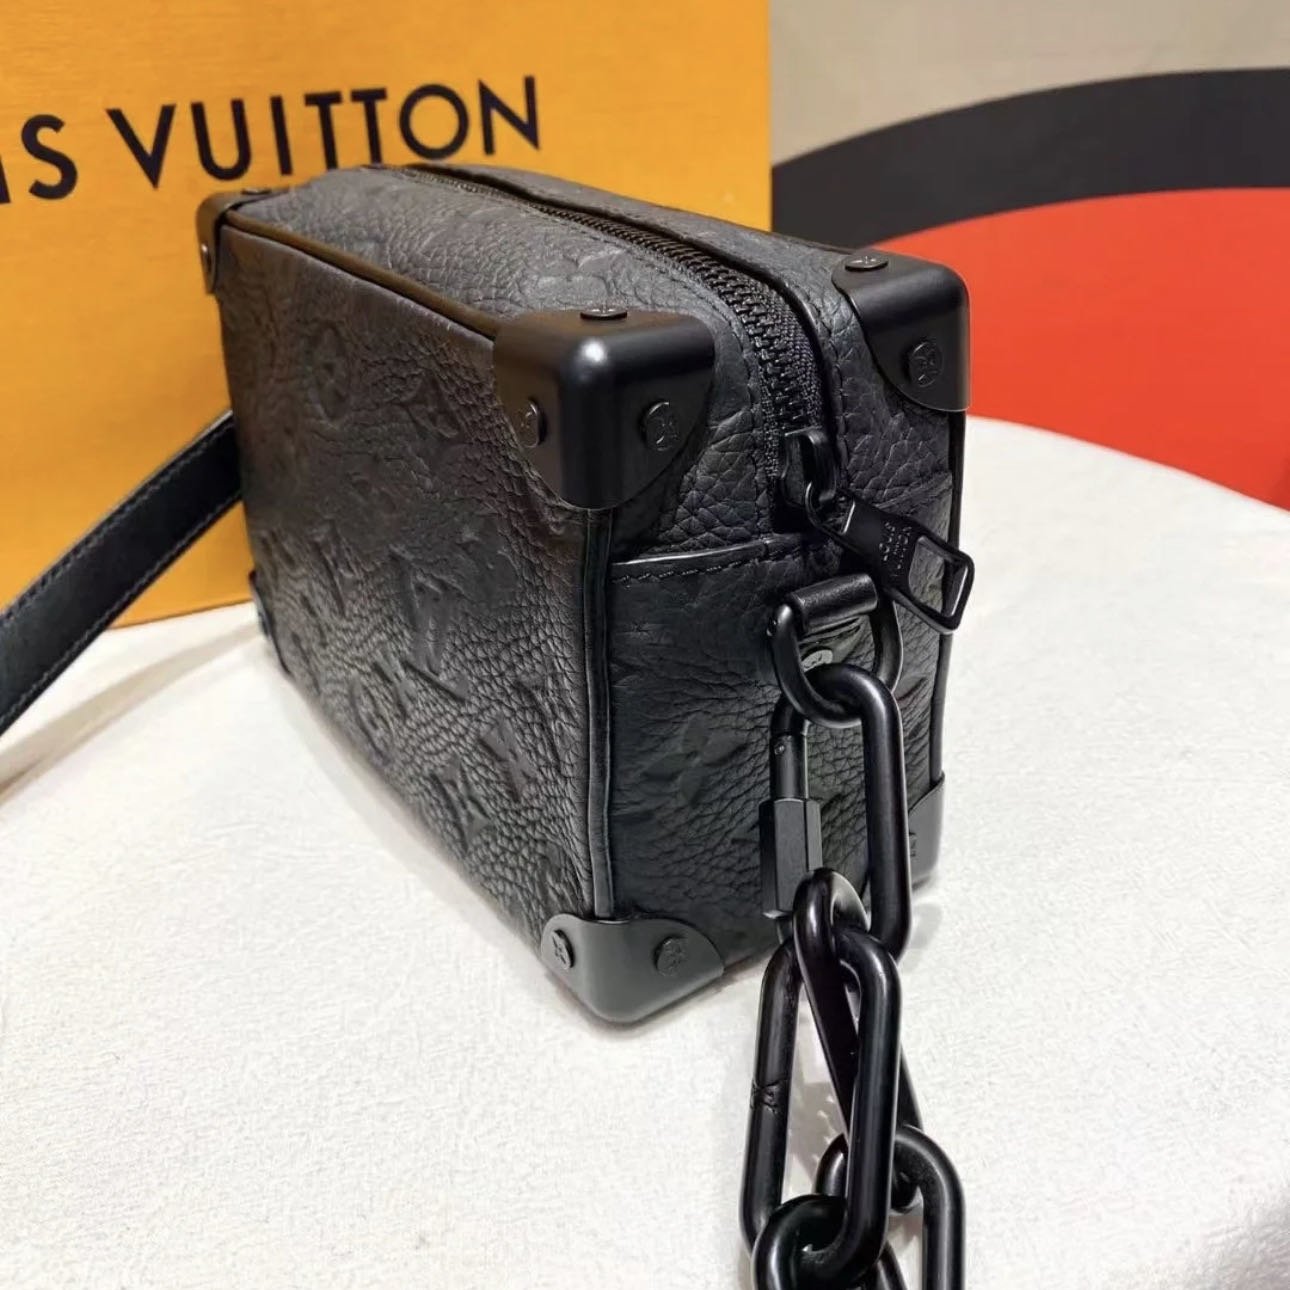 Louis Vuitton MONOGRAM Mini soft trunk (M55702)